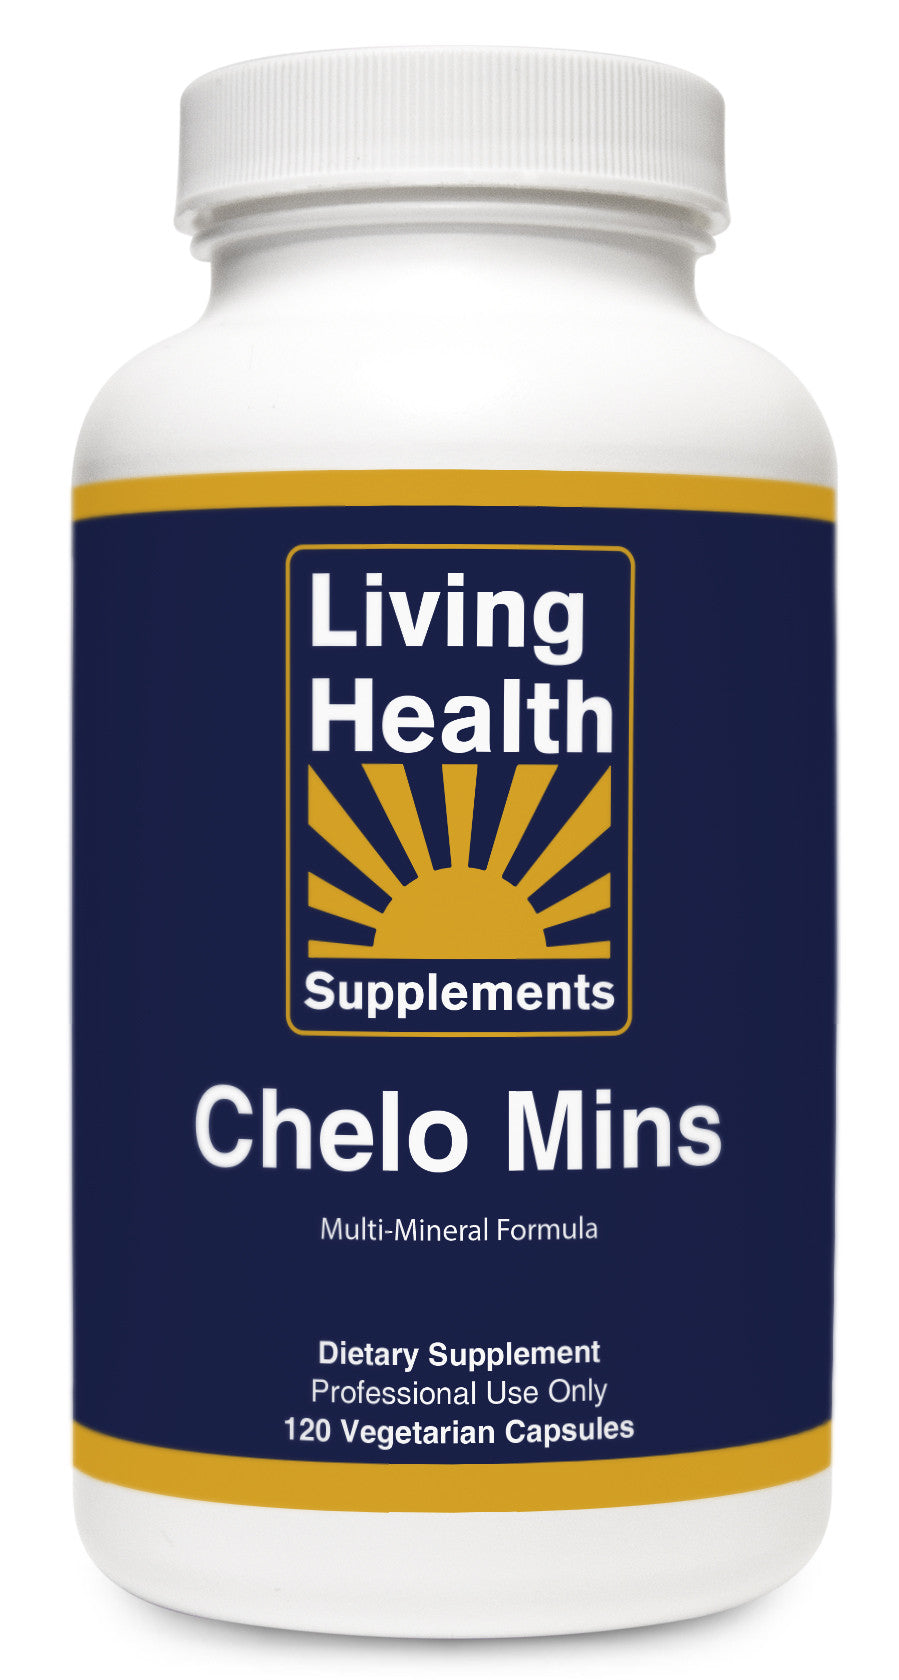 Chelo Mins - Living Health Market